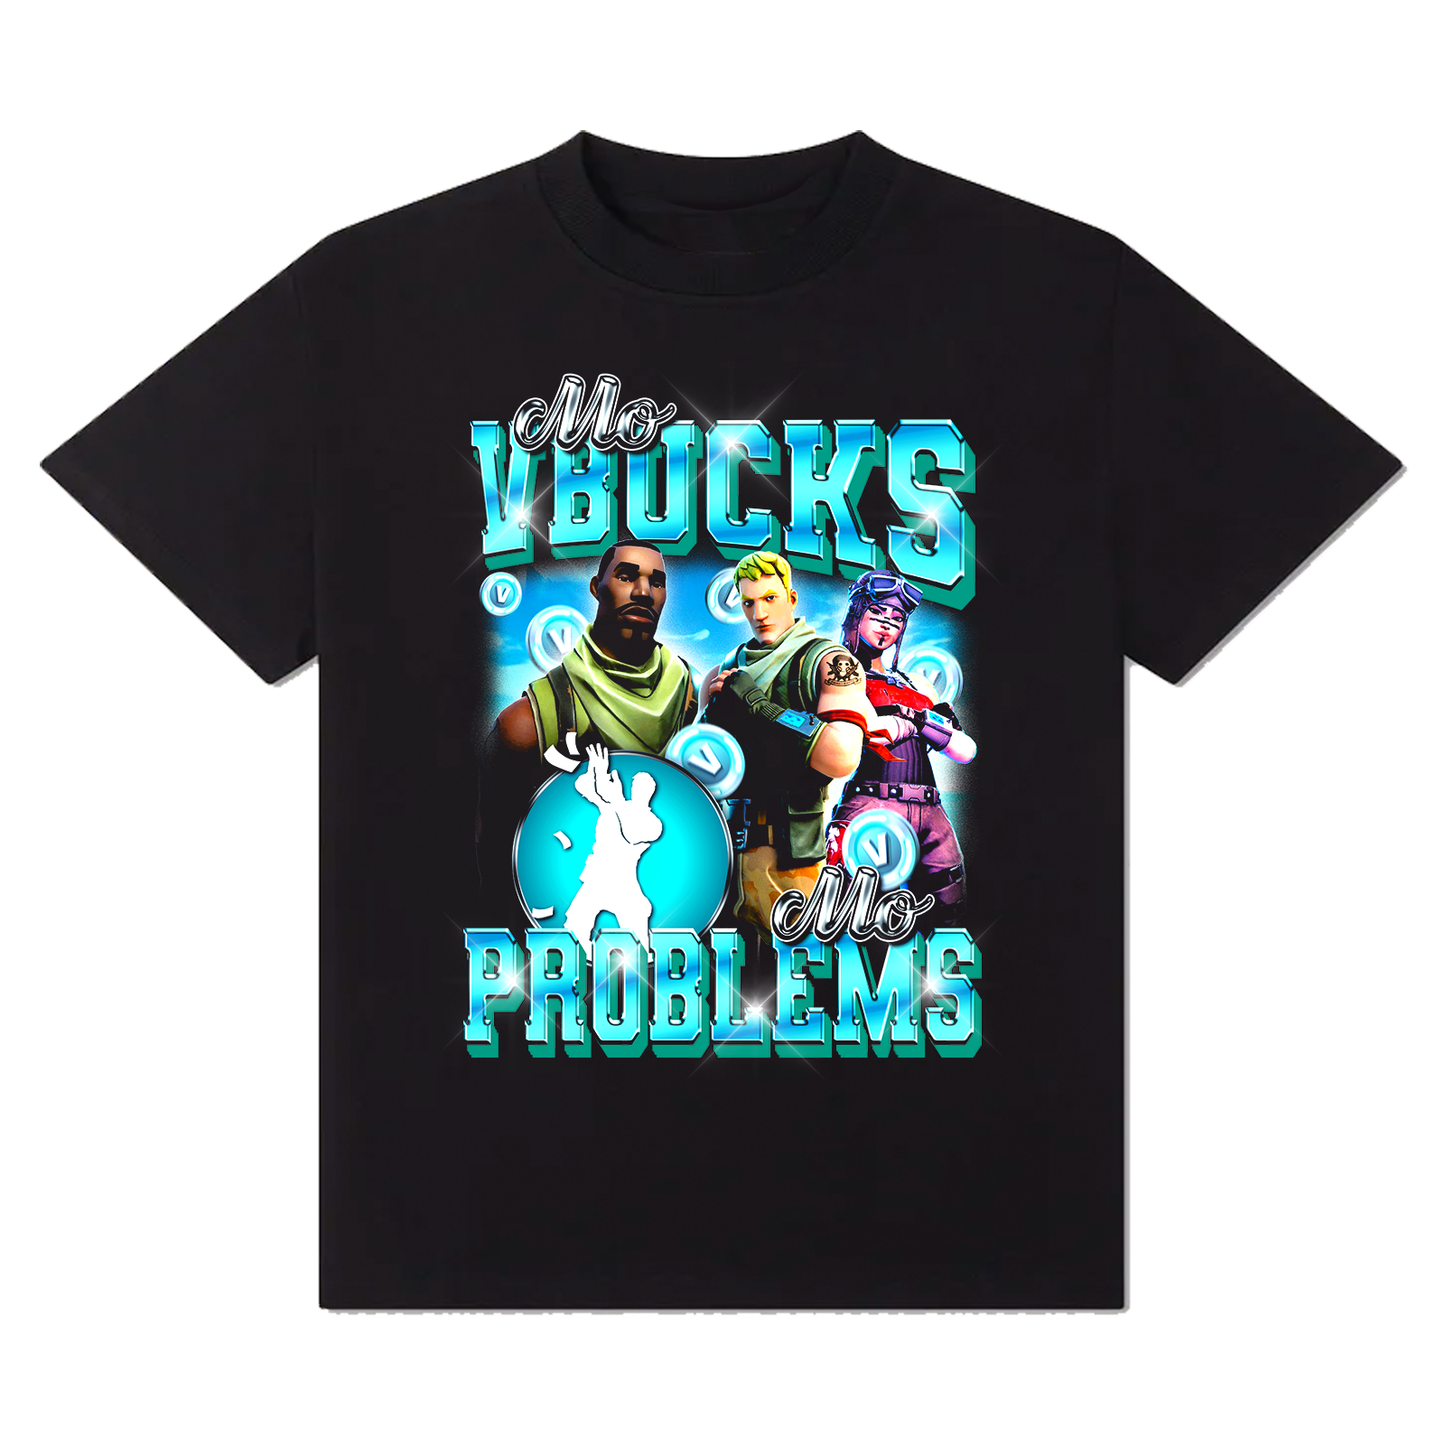 Mo VBucks, Mo Problems T-Shirt!